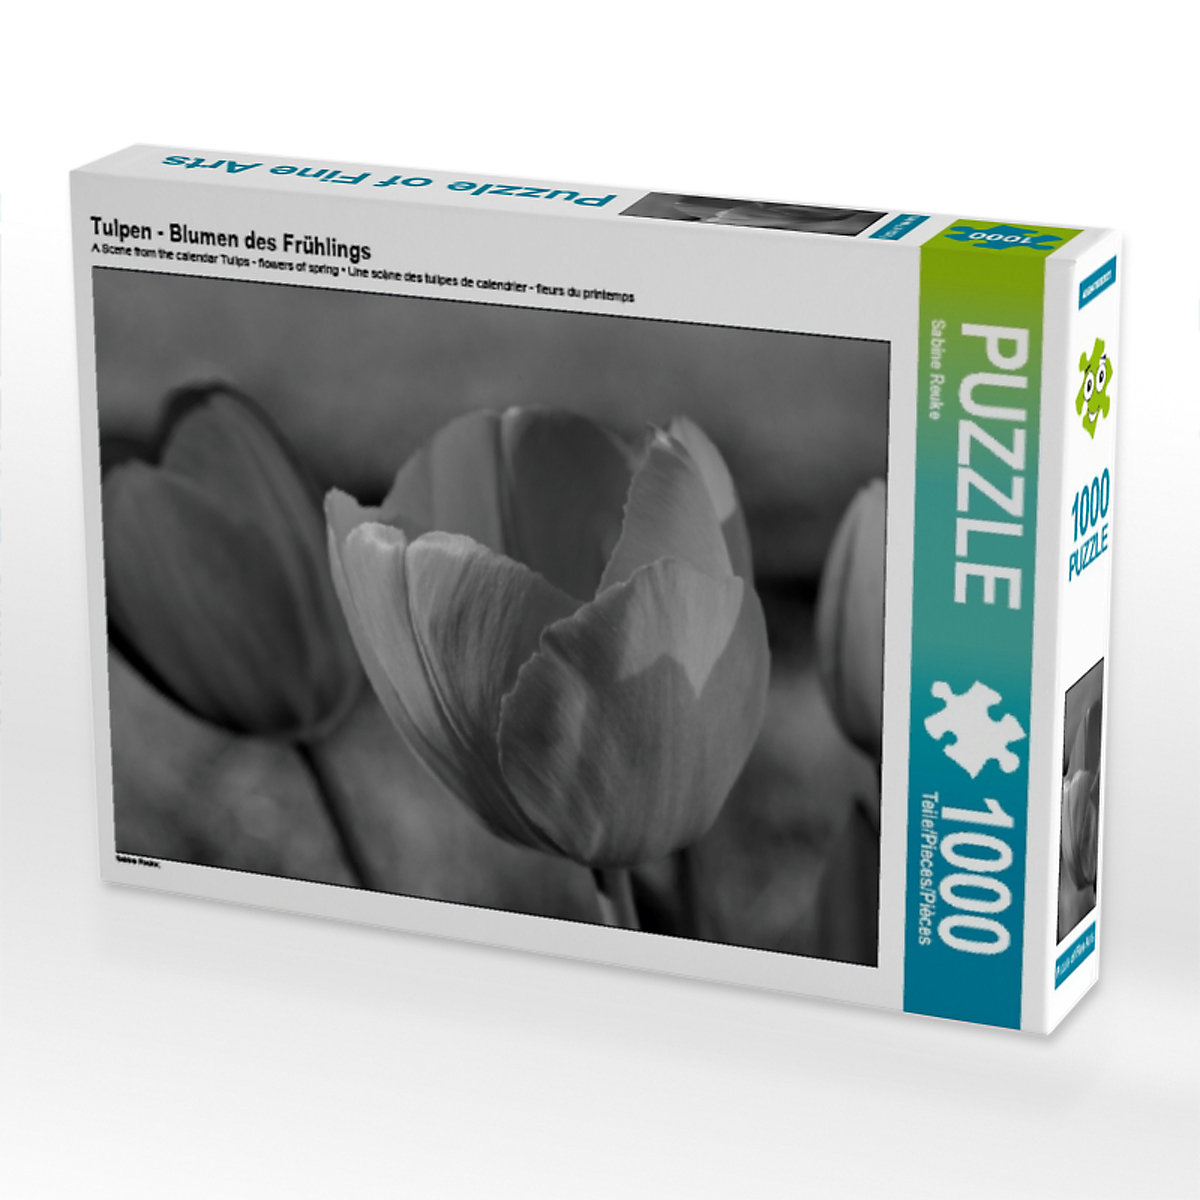 CALVENDO® Puzzle CALVENDO Puzzle Tulpen Blumen des Frühlings 1000 Teile Foto-Puzzle für glückliche Stunden